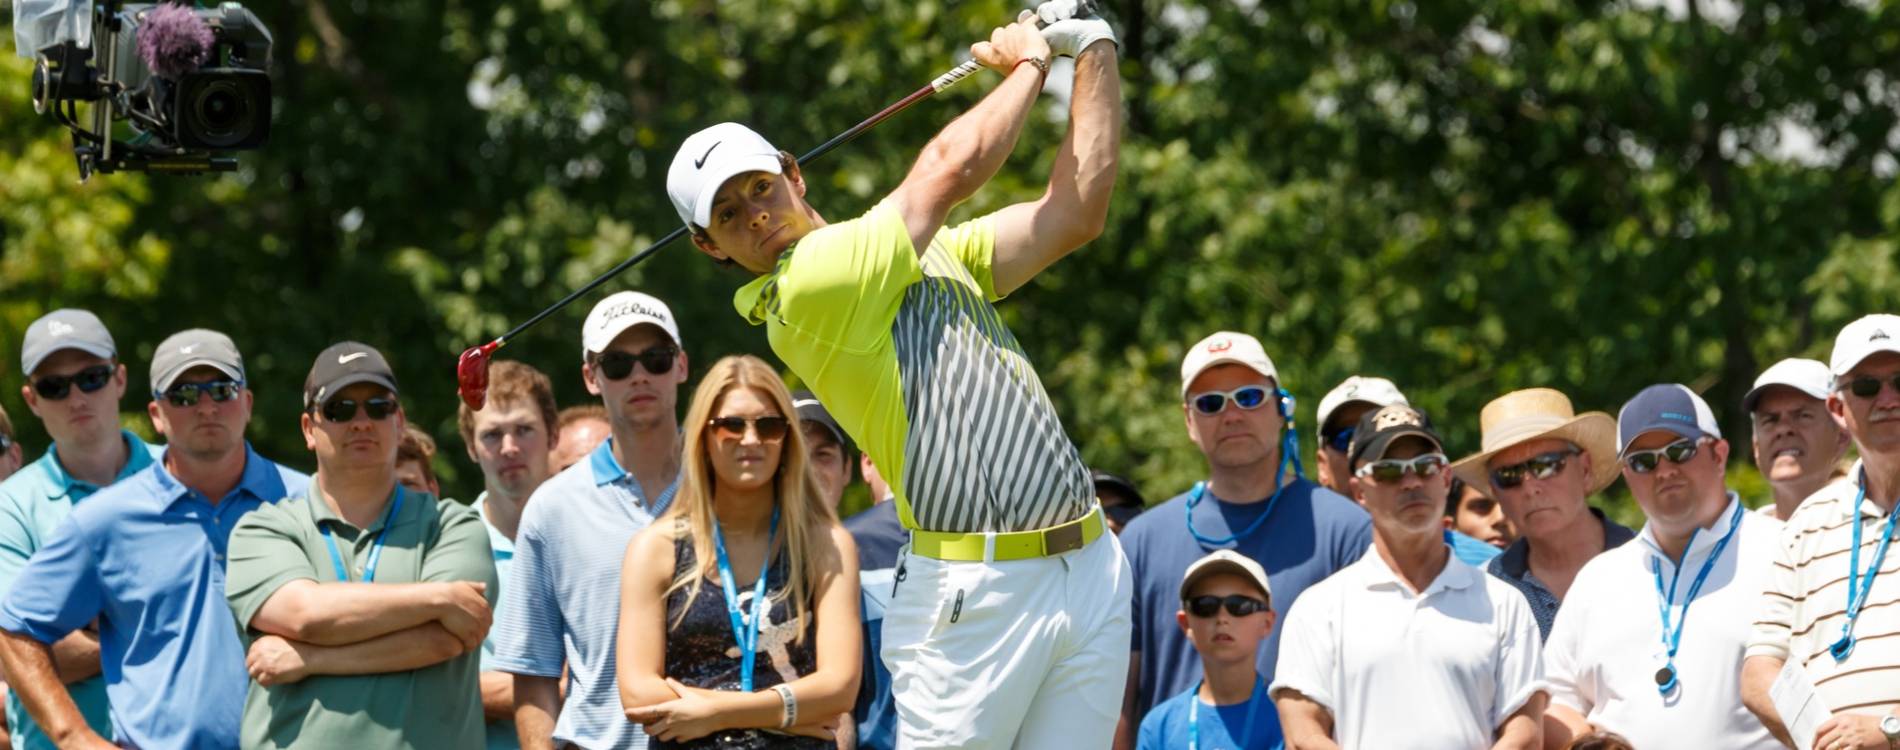 Rory McIlroy playing on the PGA Tour